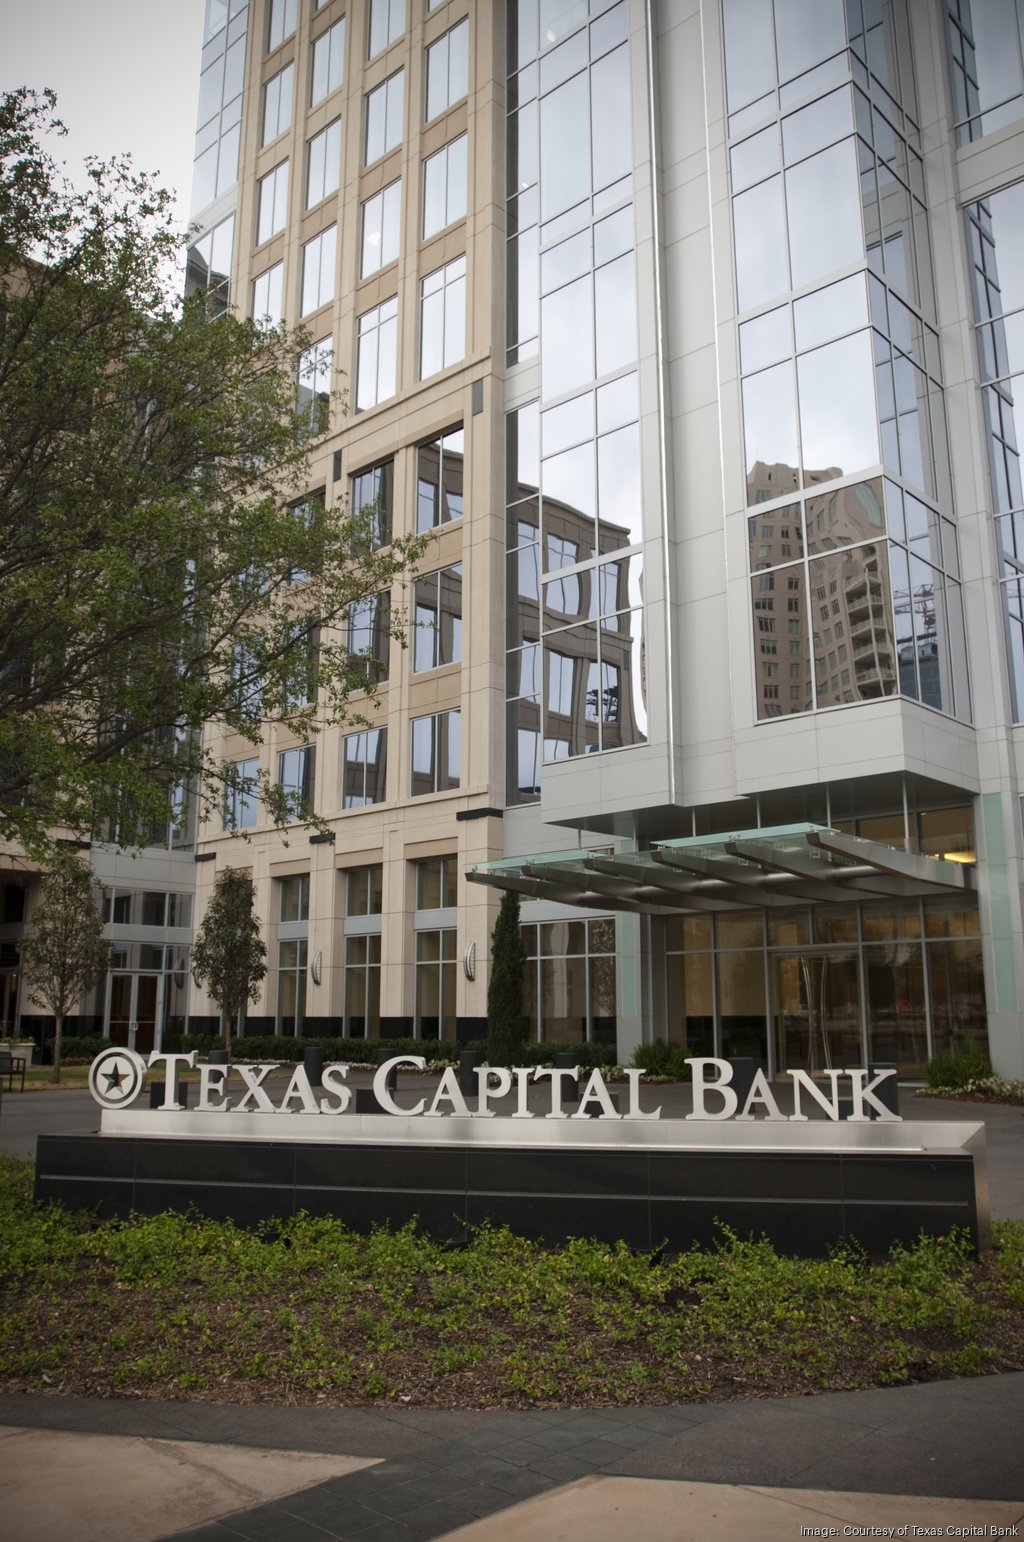 Texas Capital Bank Building